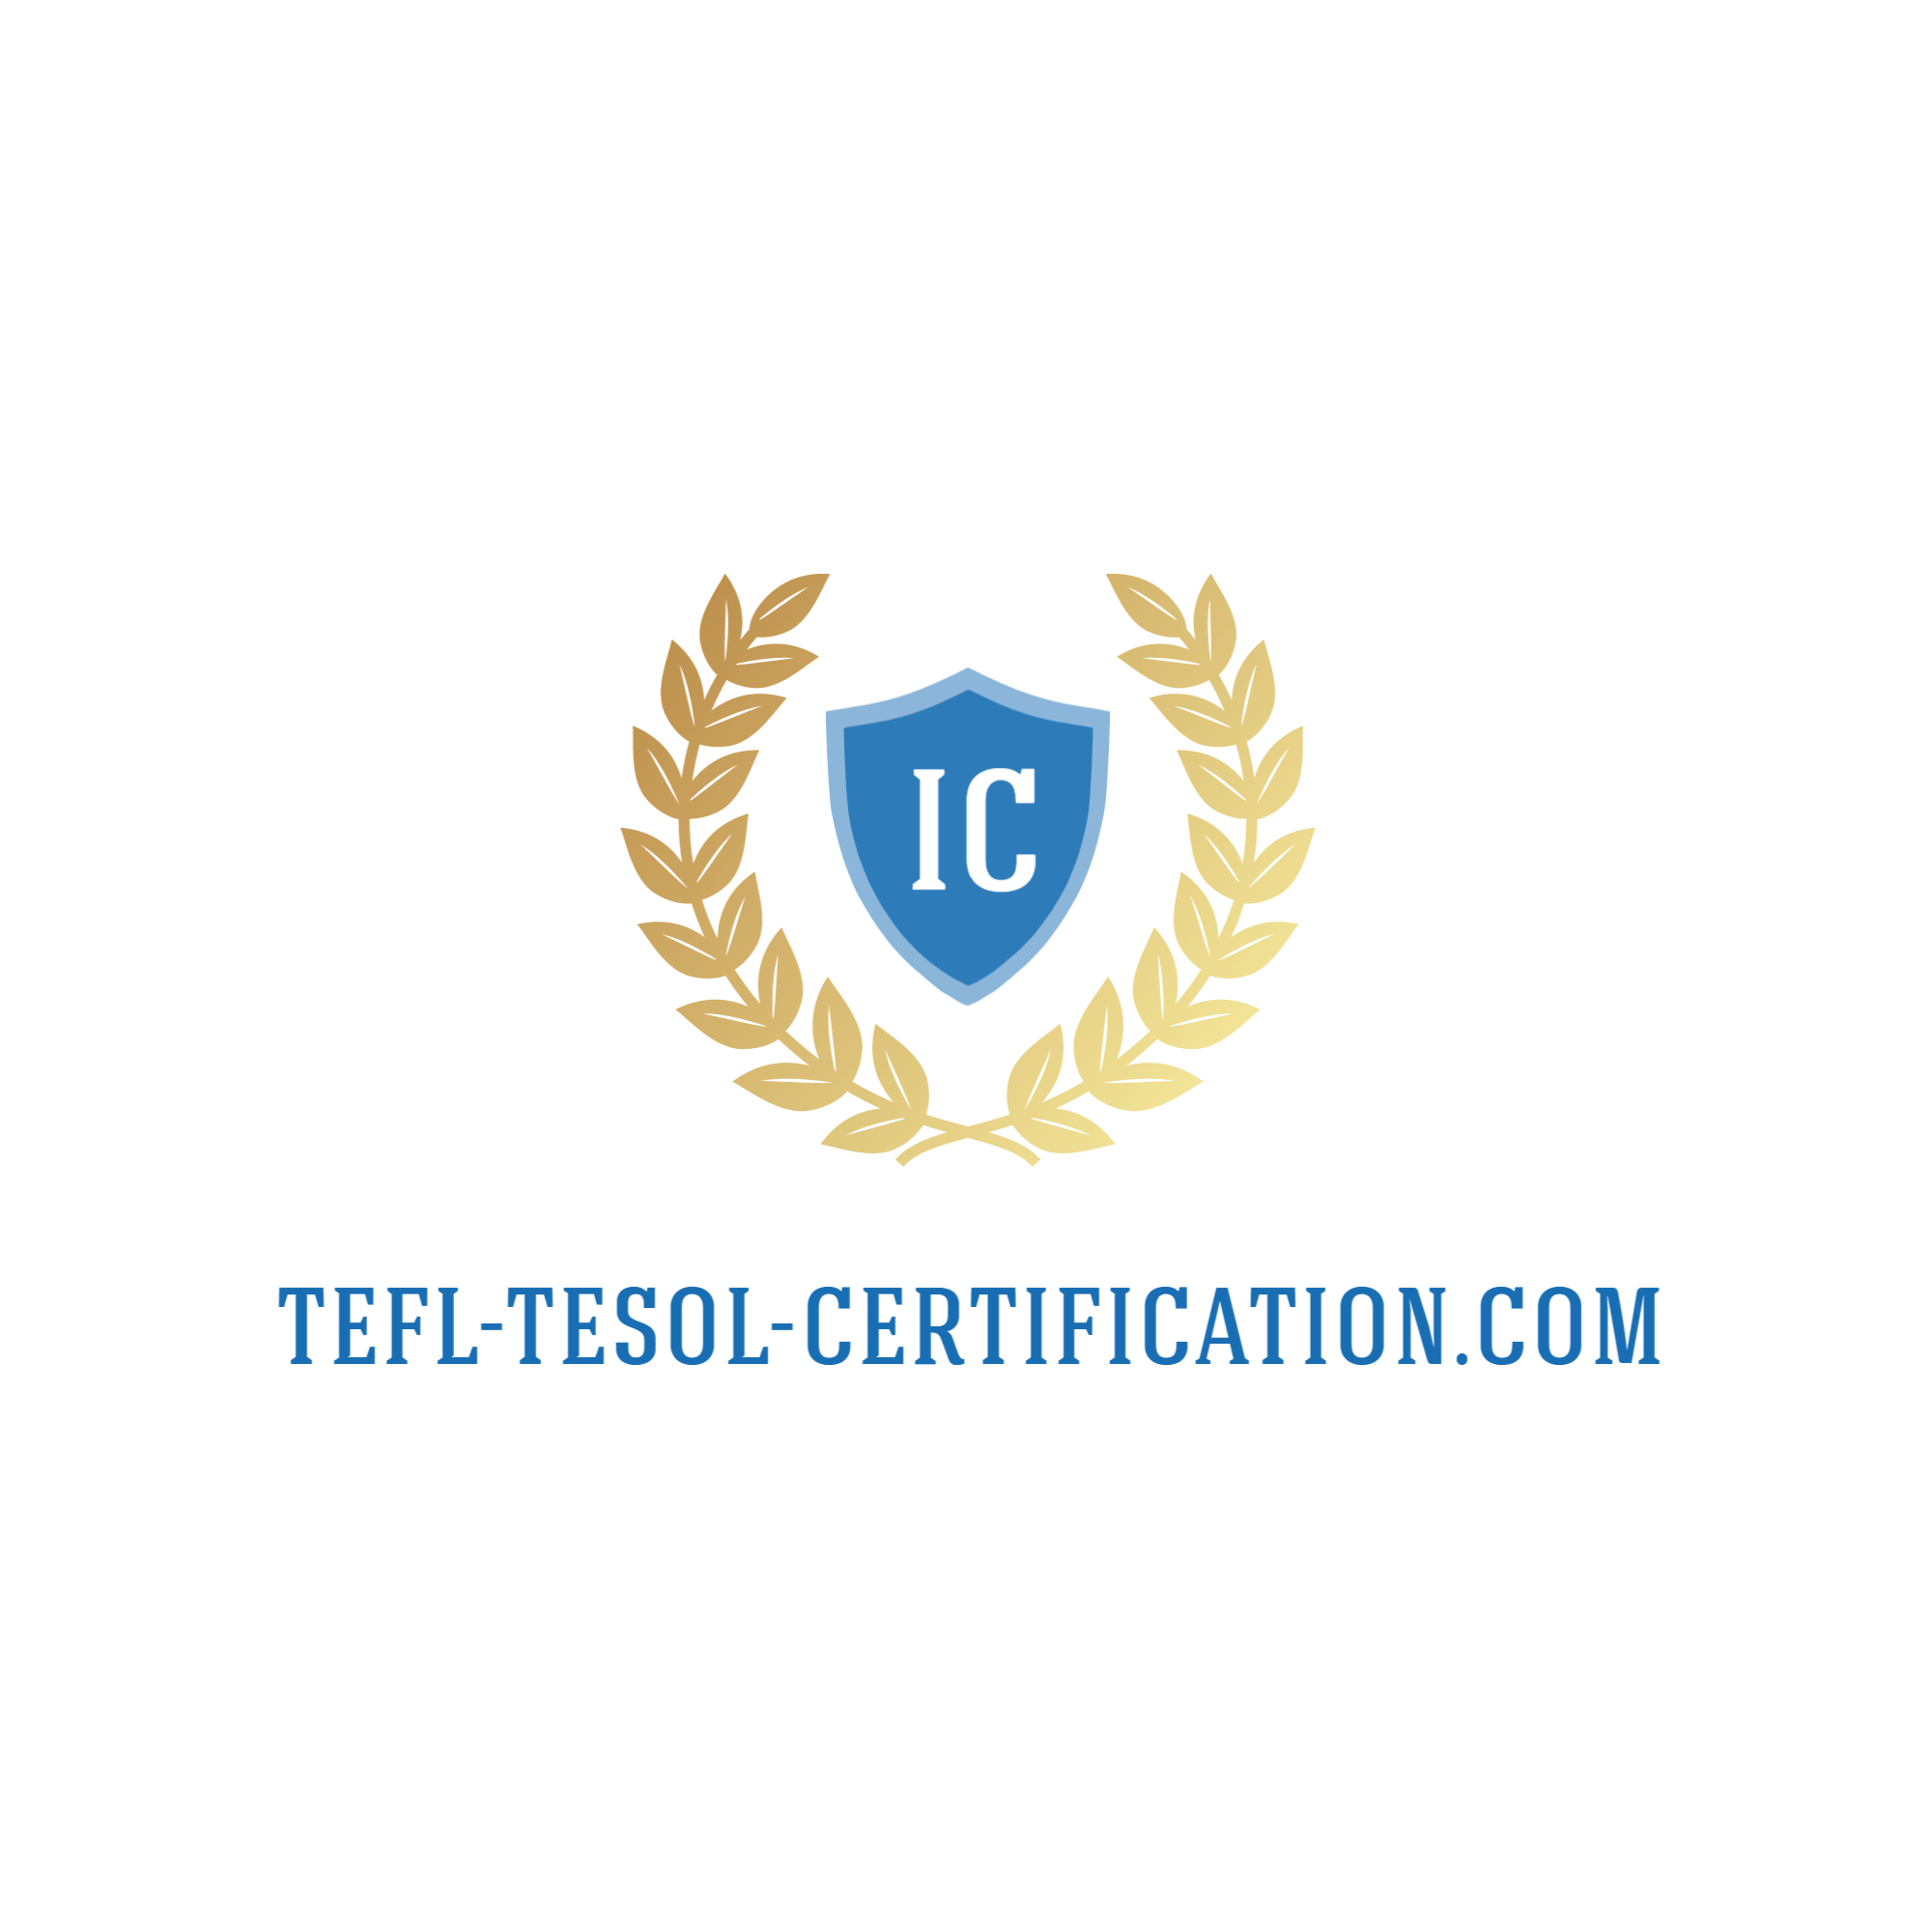 TEFL TESOL Certification com Accrin co uk